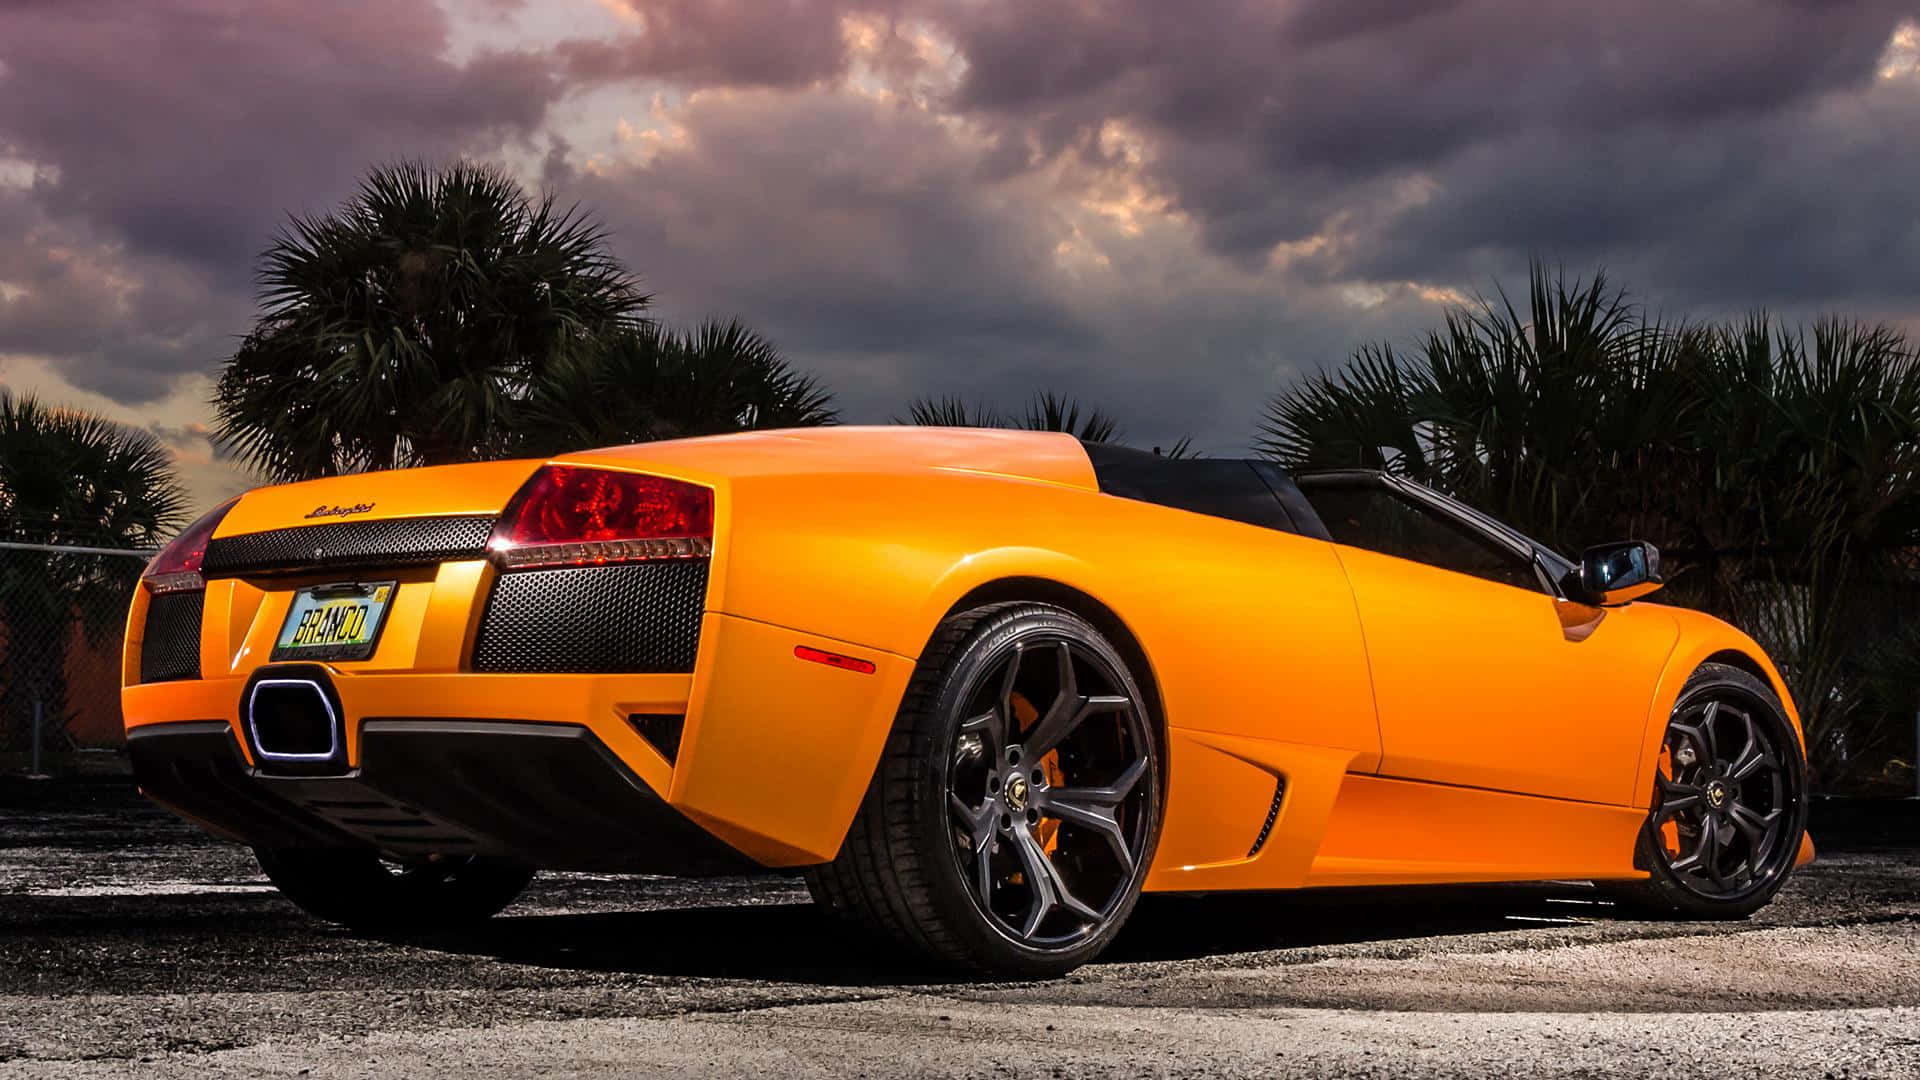 Sleek and Powerful Lamborghini Murciélago Wallpaper